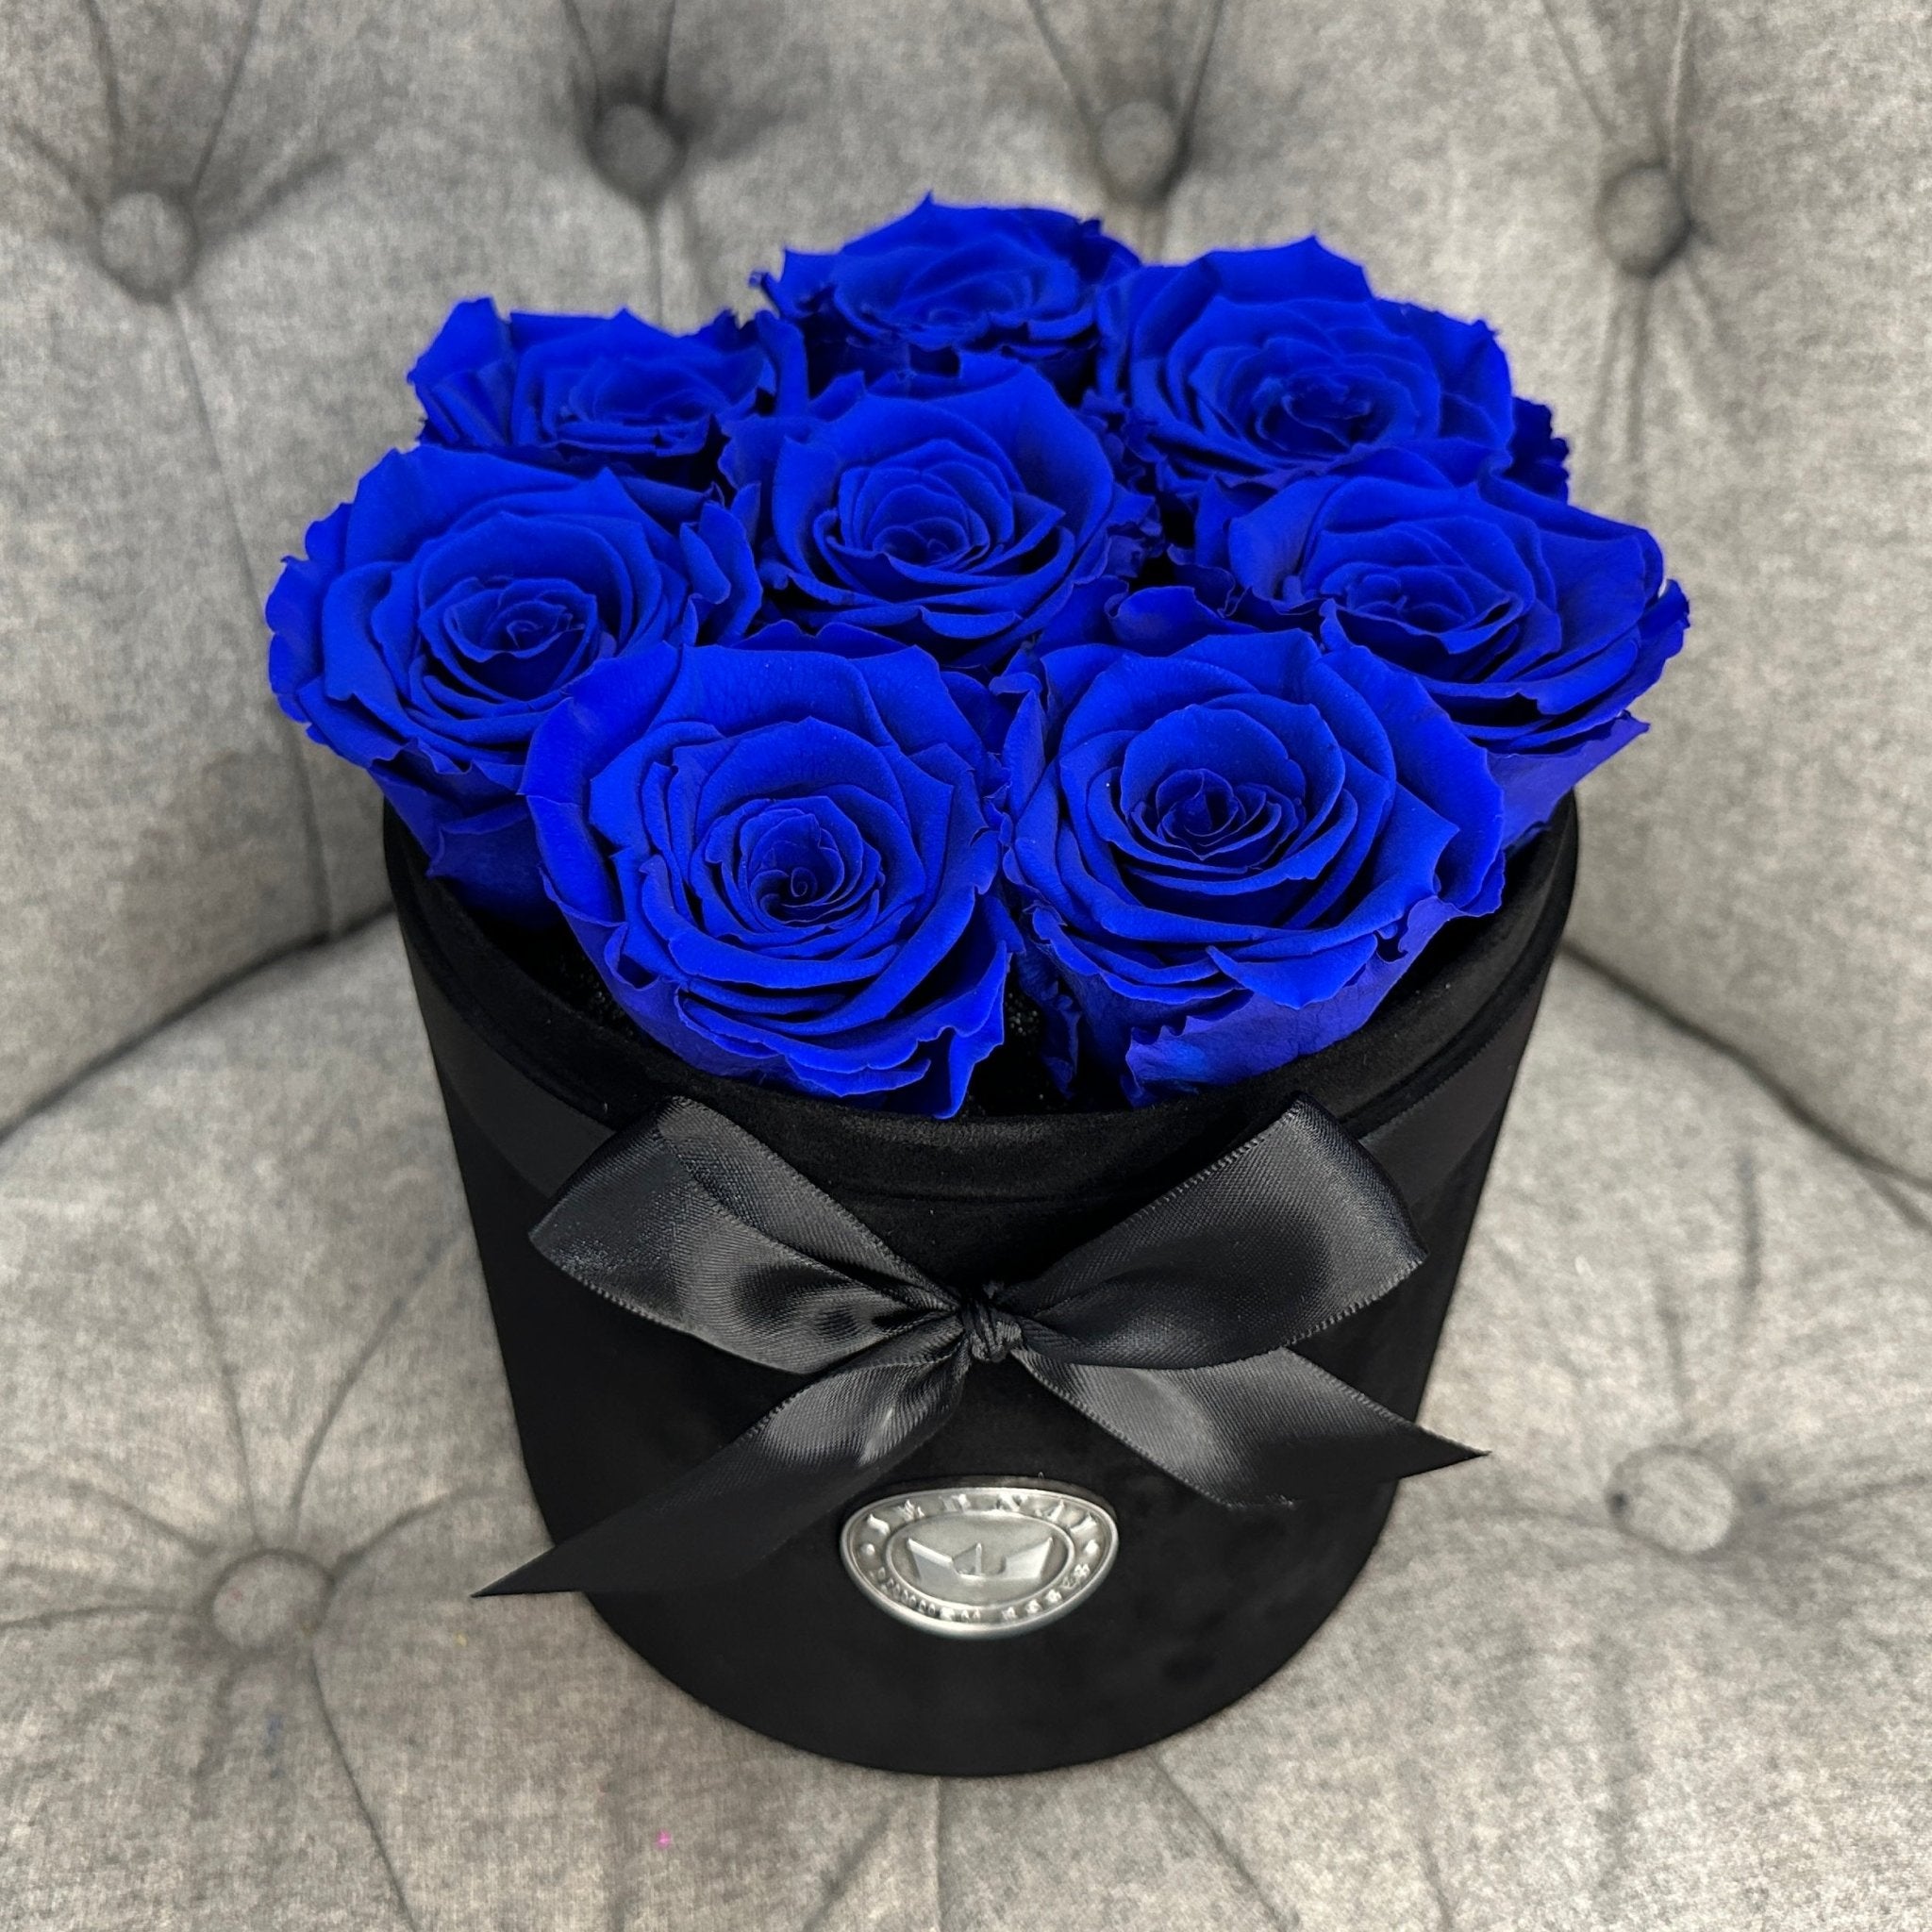 Medium Black Suede Forever Rose Box - Deep Blue Sea Eternal Roses - Jednay Roses